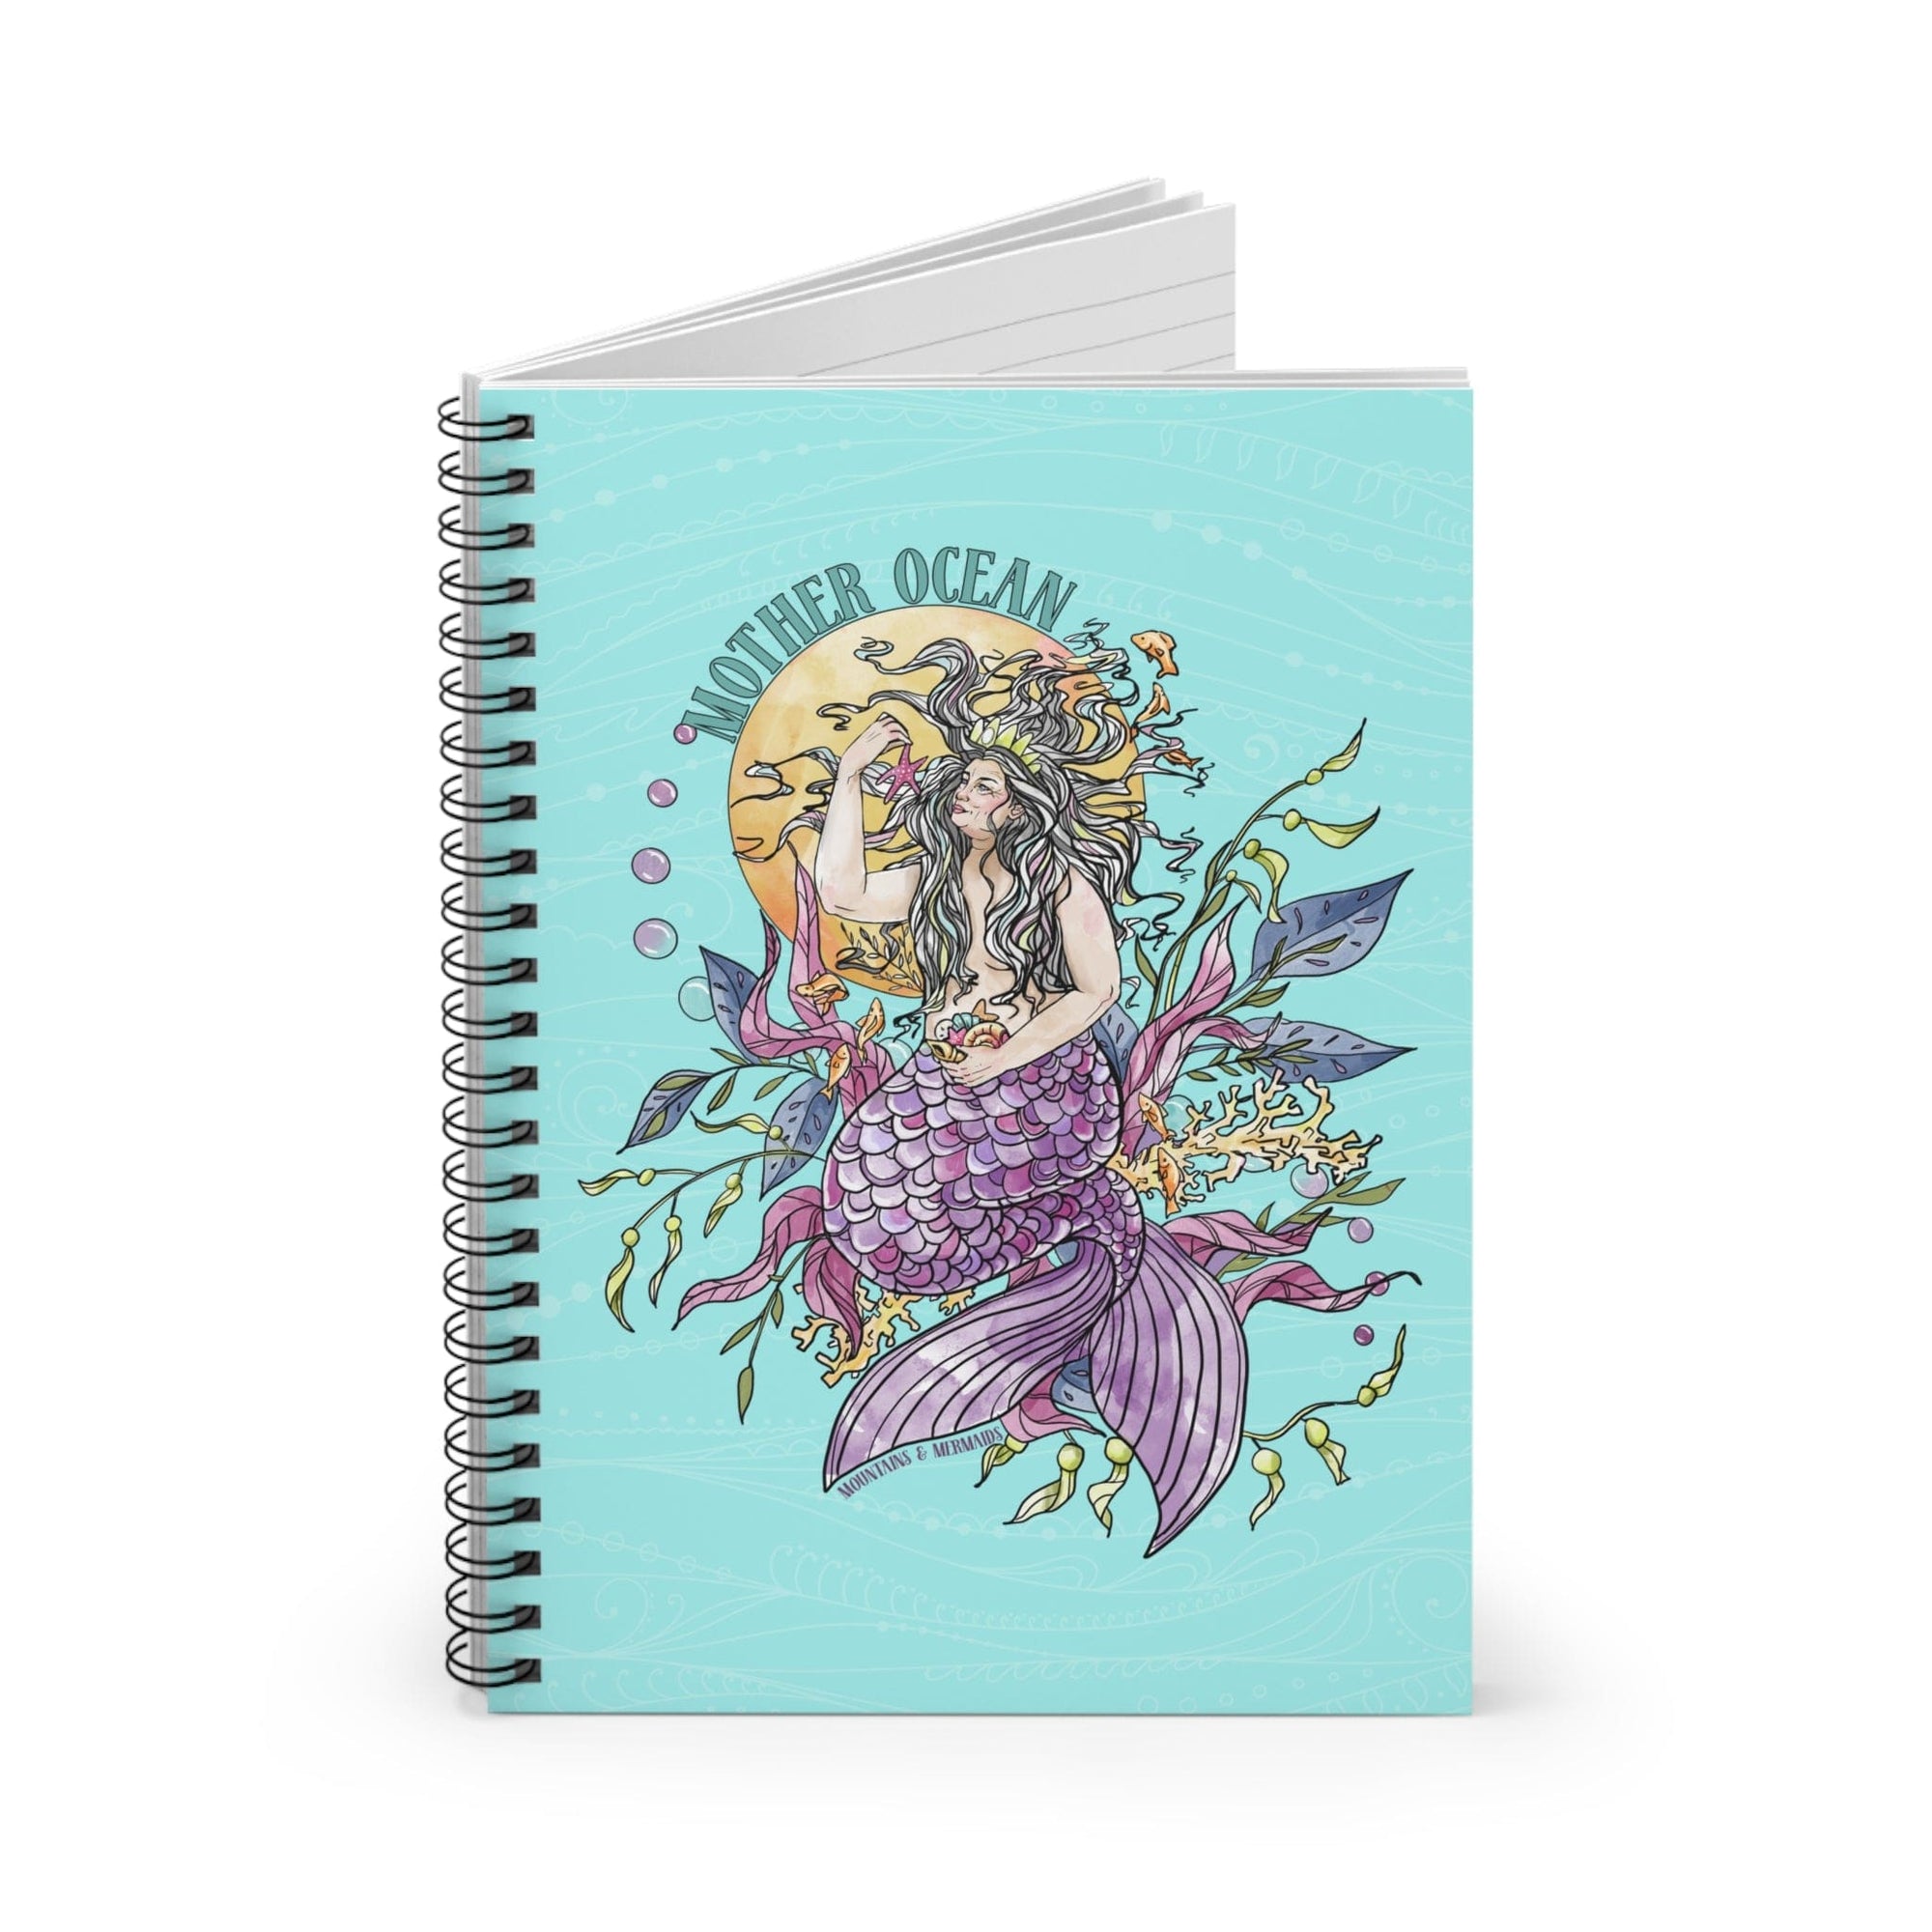 Mother Ocean Teal Spiral Notebook - Ruled Line - Mountains & Mermaids